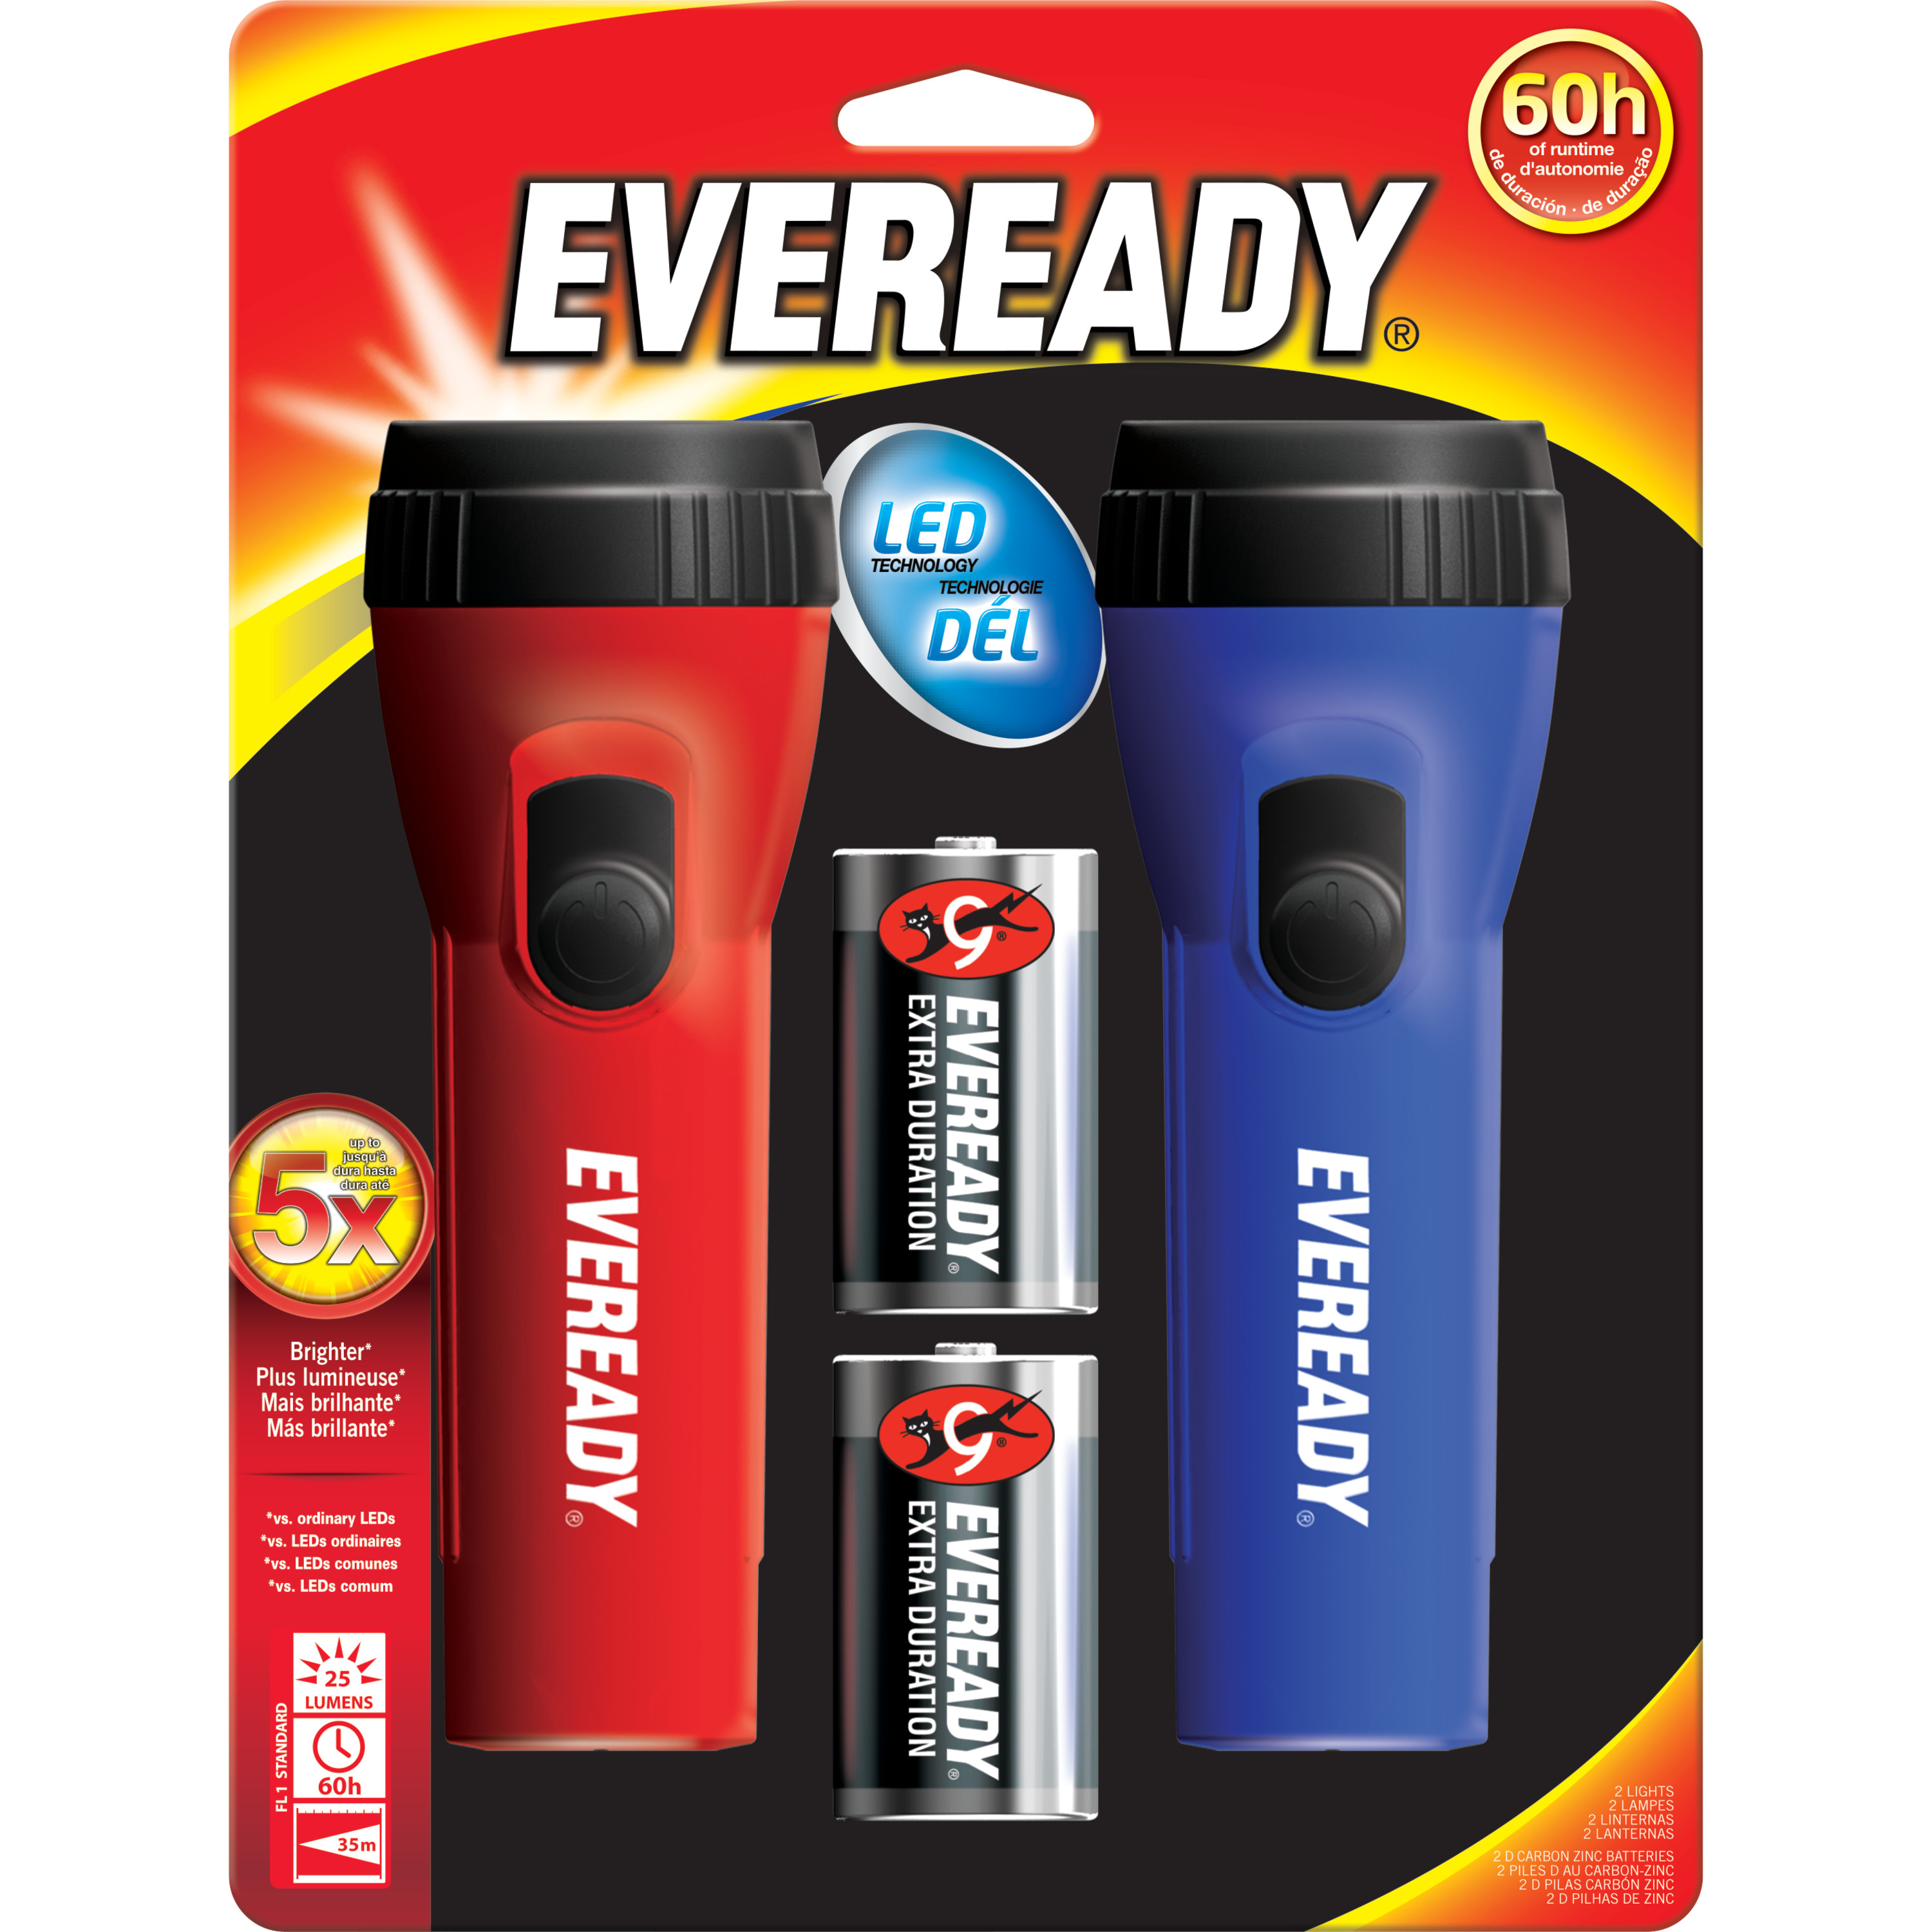 Eveready General Purpose LED Flashlight 2 Pack - image 1 of 3